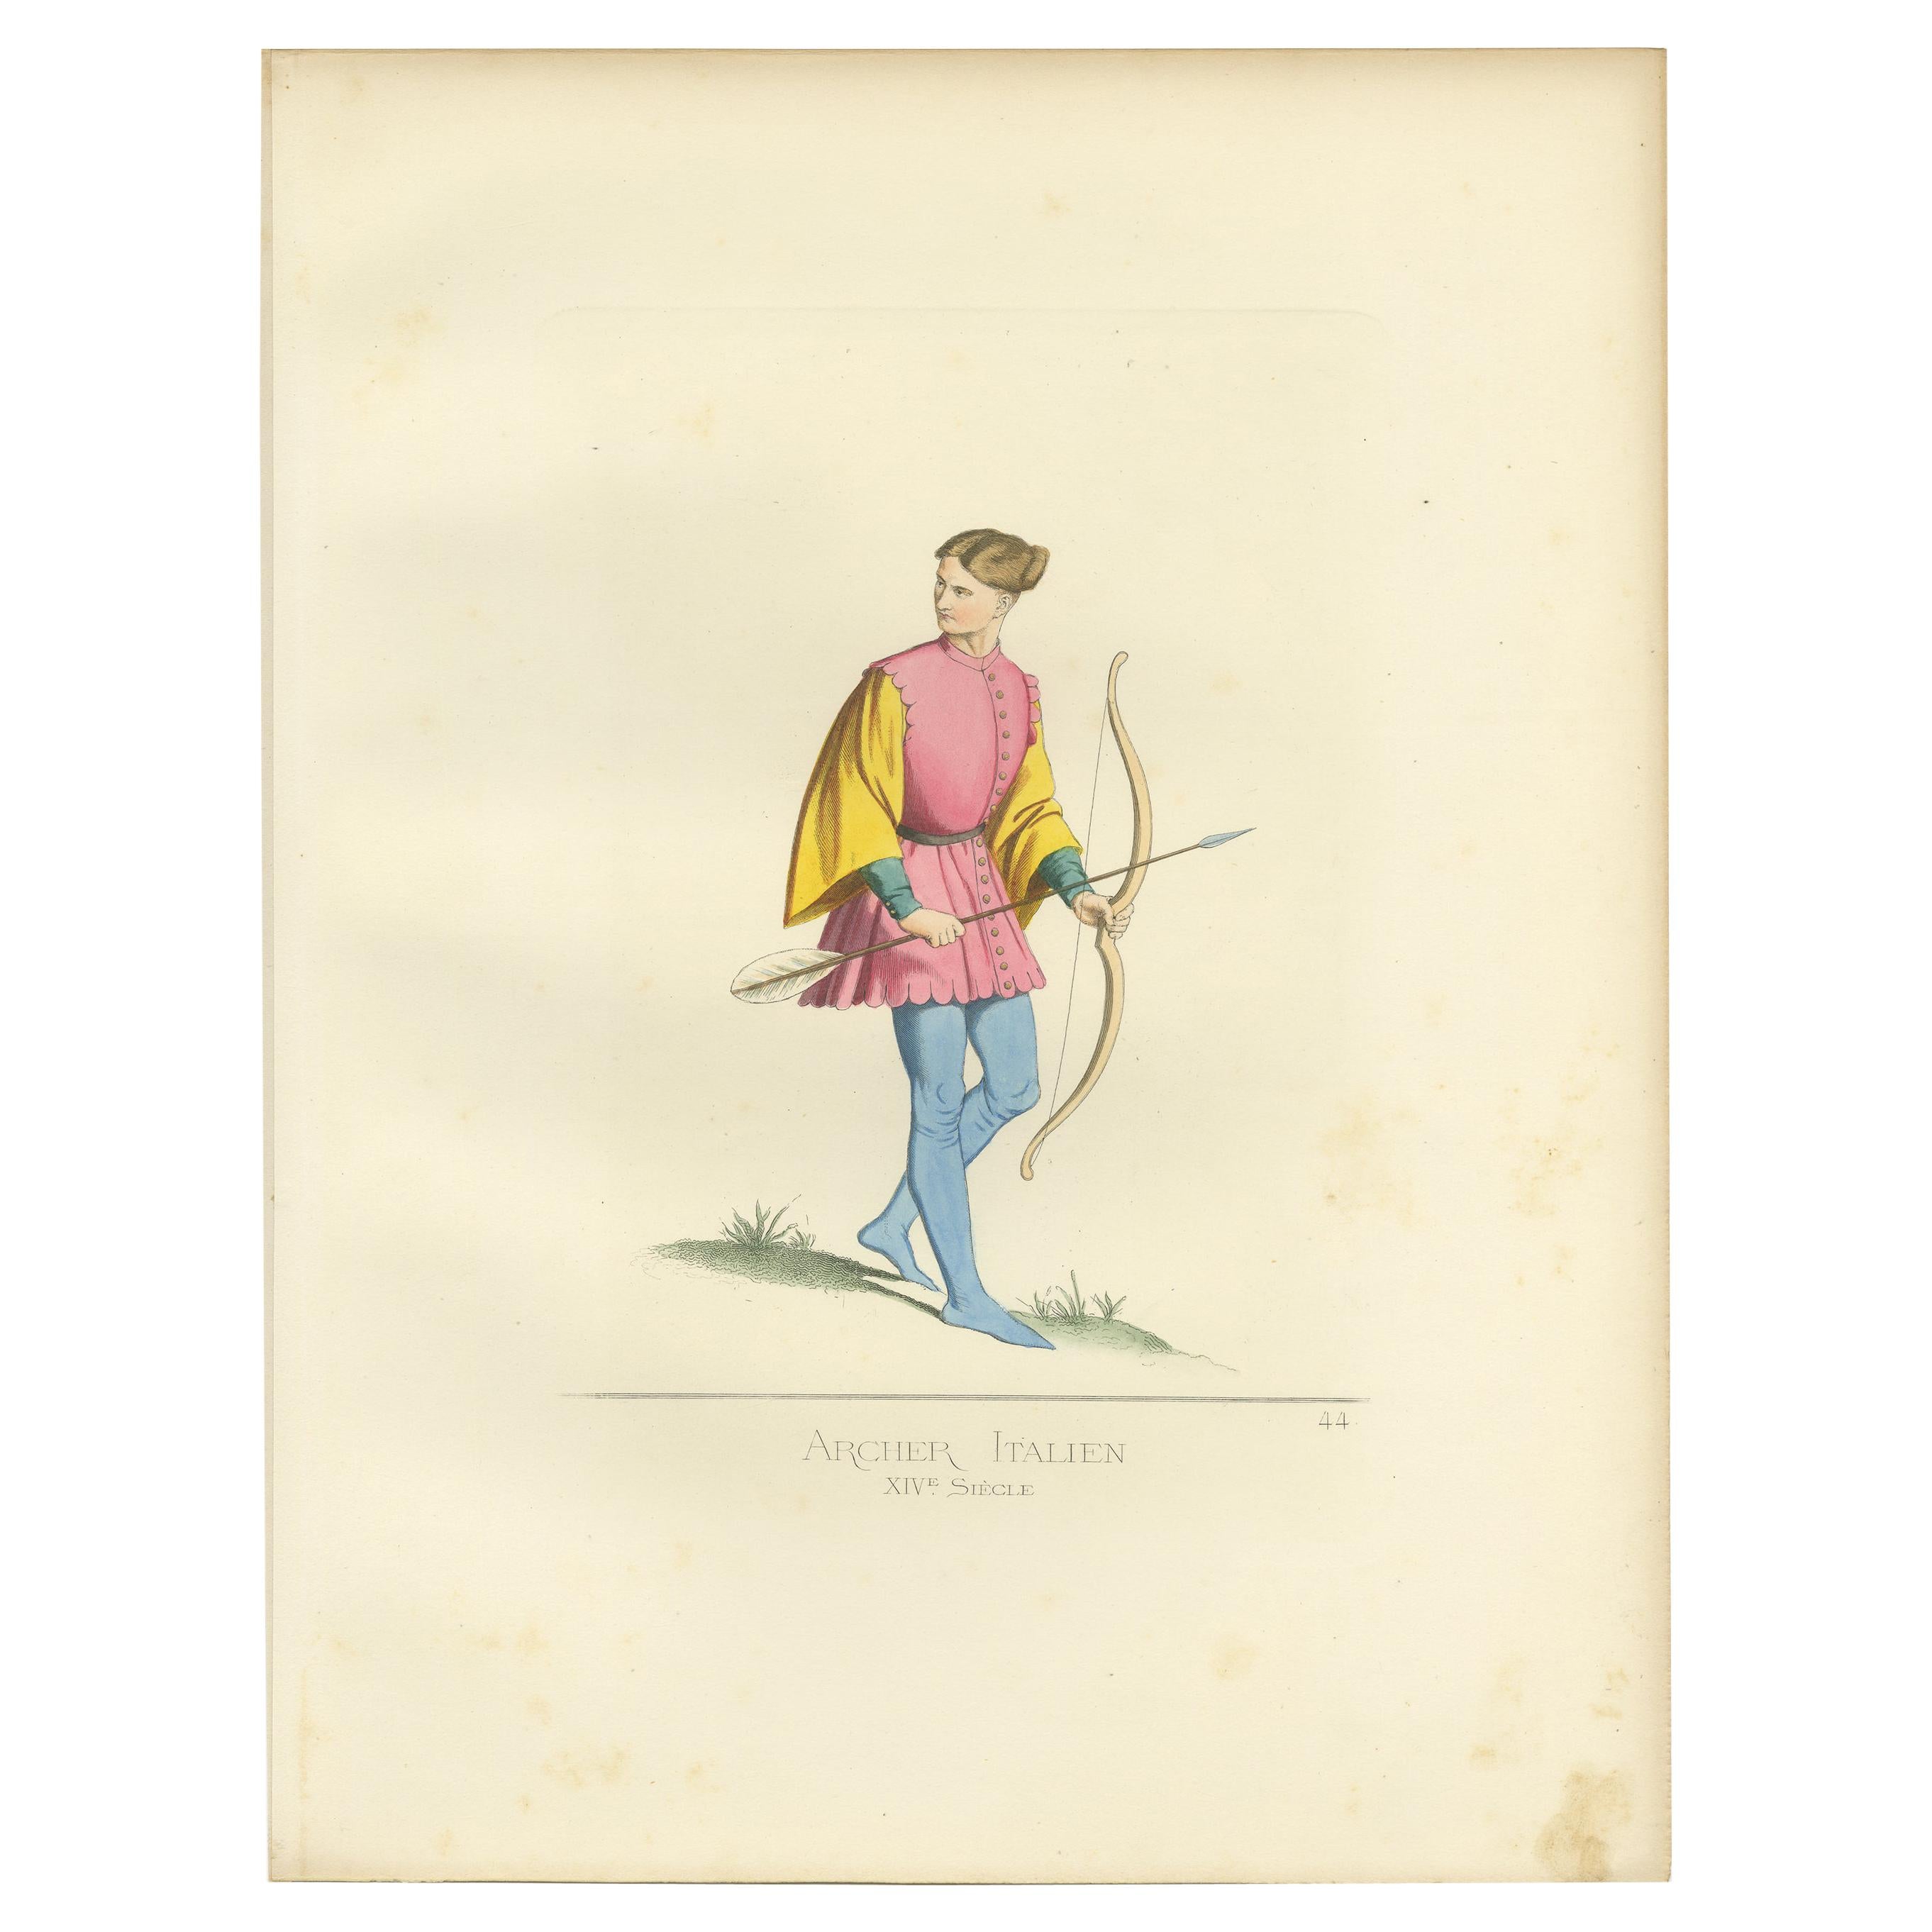 Antique Print of an Italian Archer, 14th Century, by Bonnard, 1860